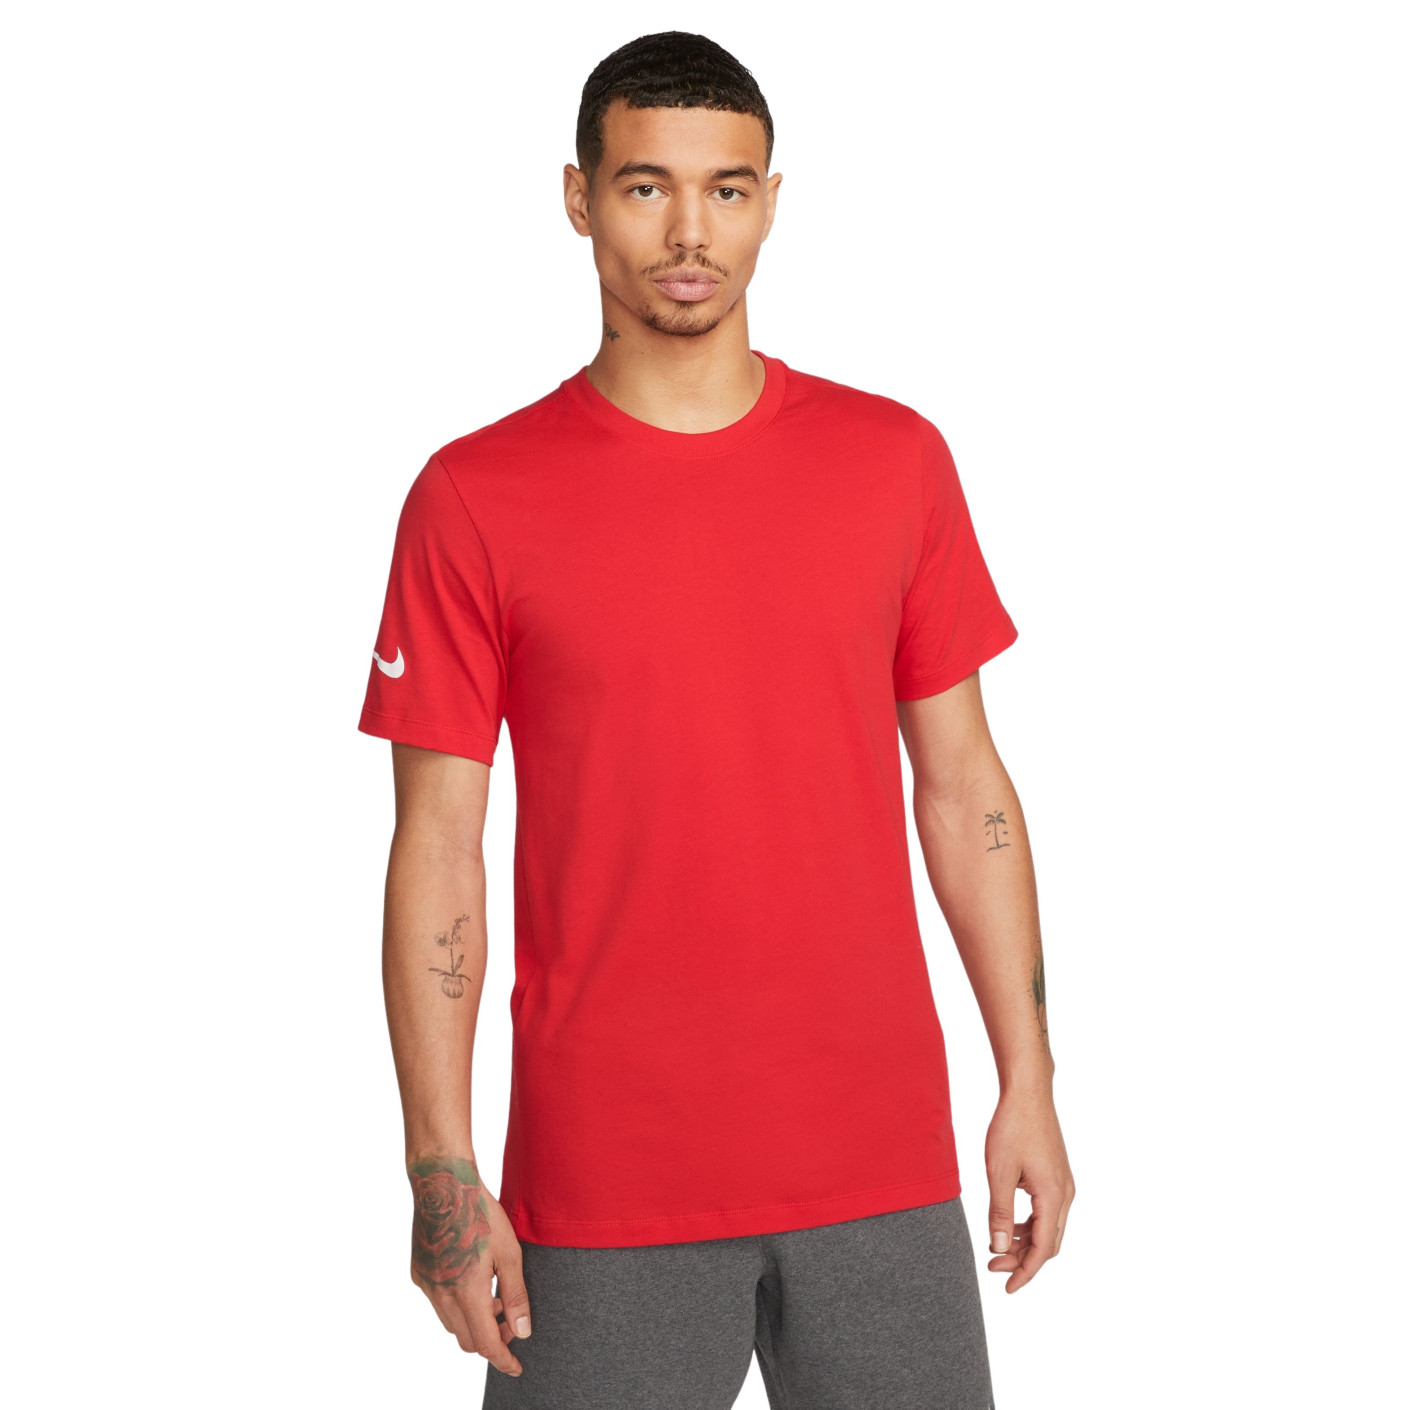 Nike T-Shirt Red -